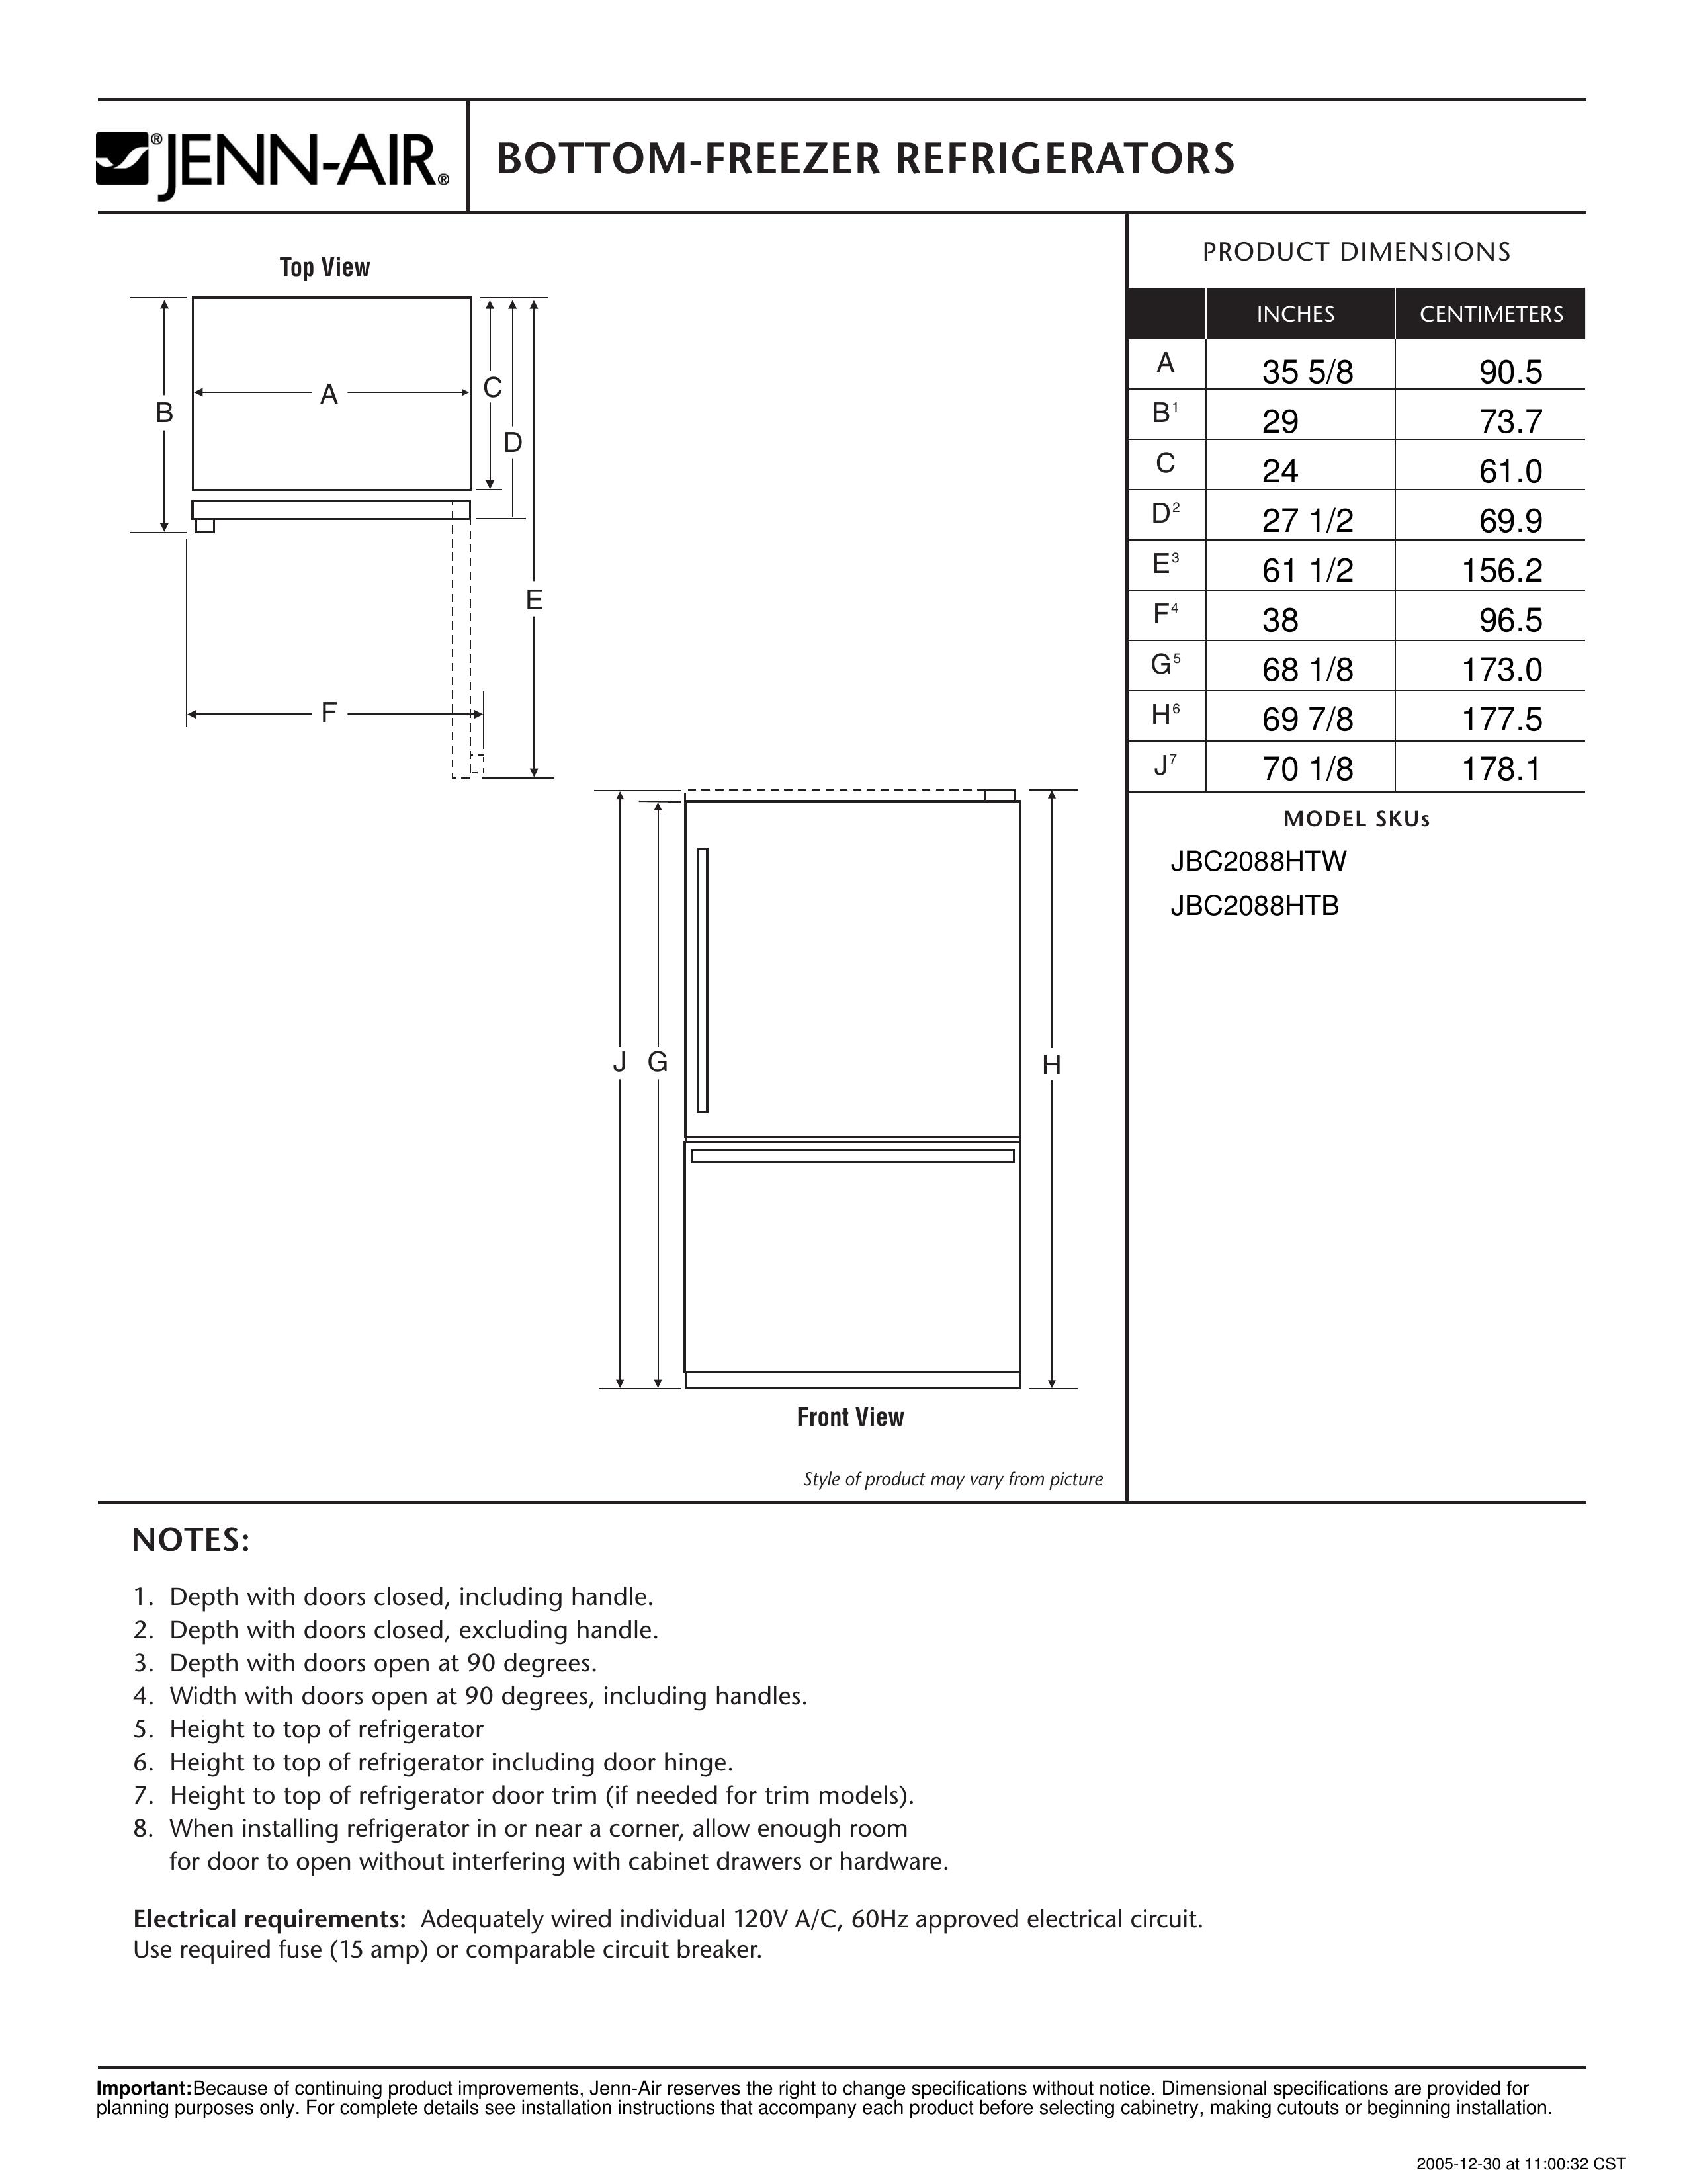 Jenn-Air JBC2088HTB Refrigerator User Manual